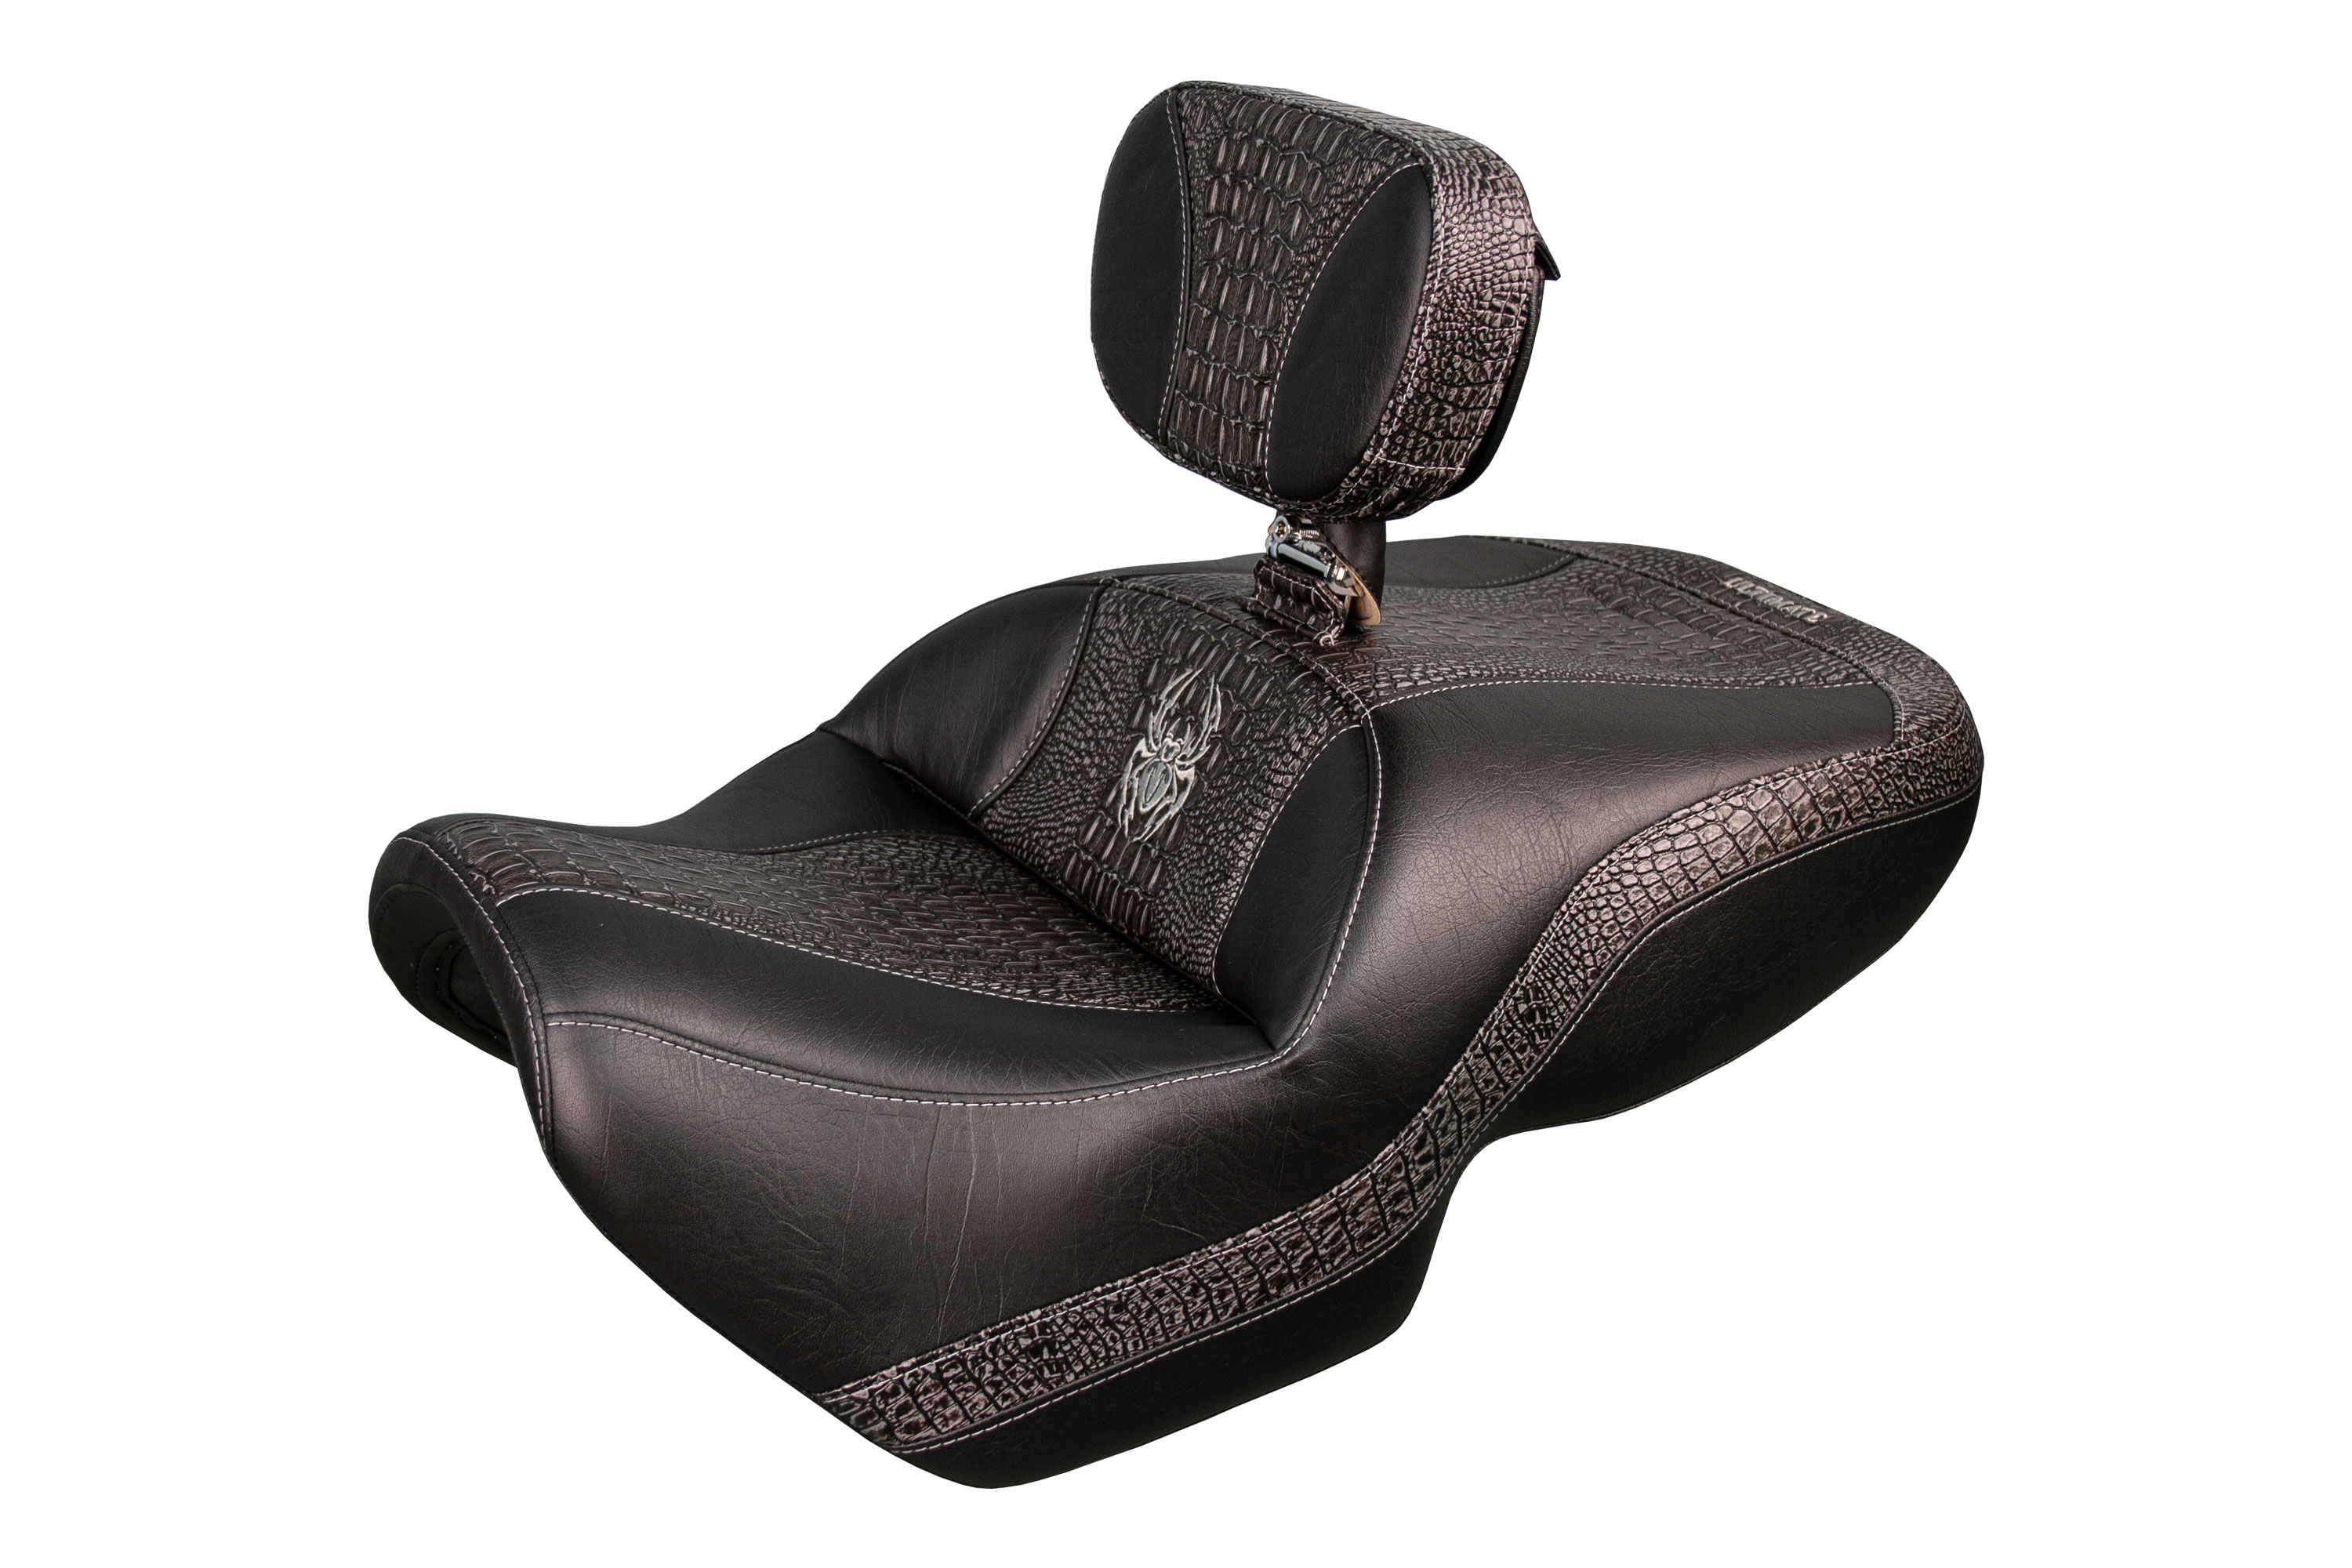 Spyder F3 Seat - Ebony Croc Inlays and Logos (2020 and Newer)